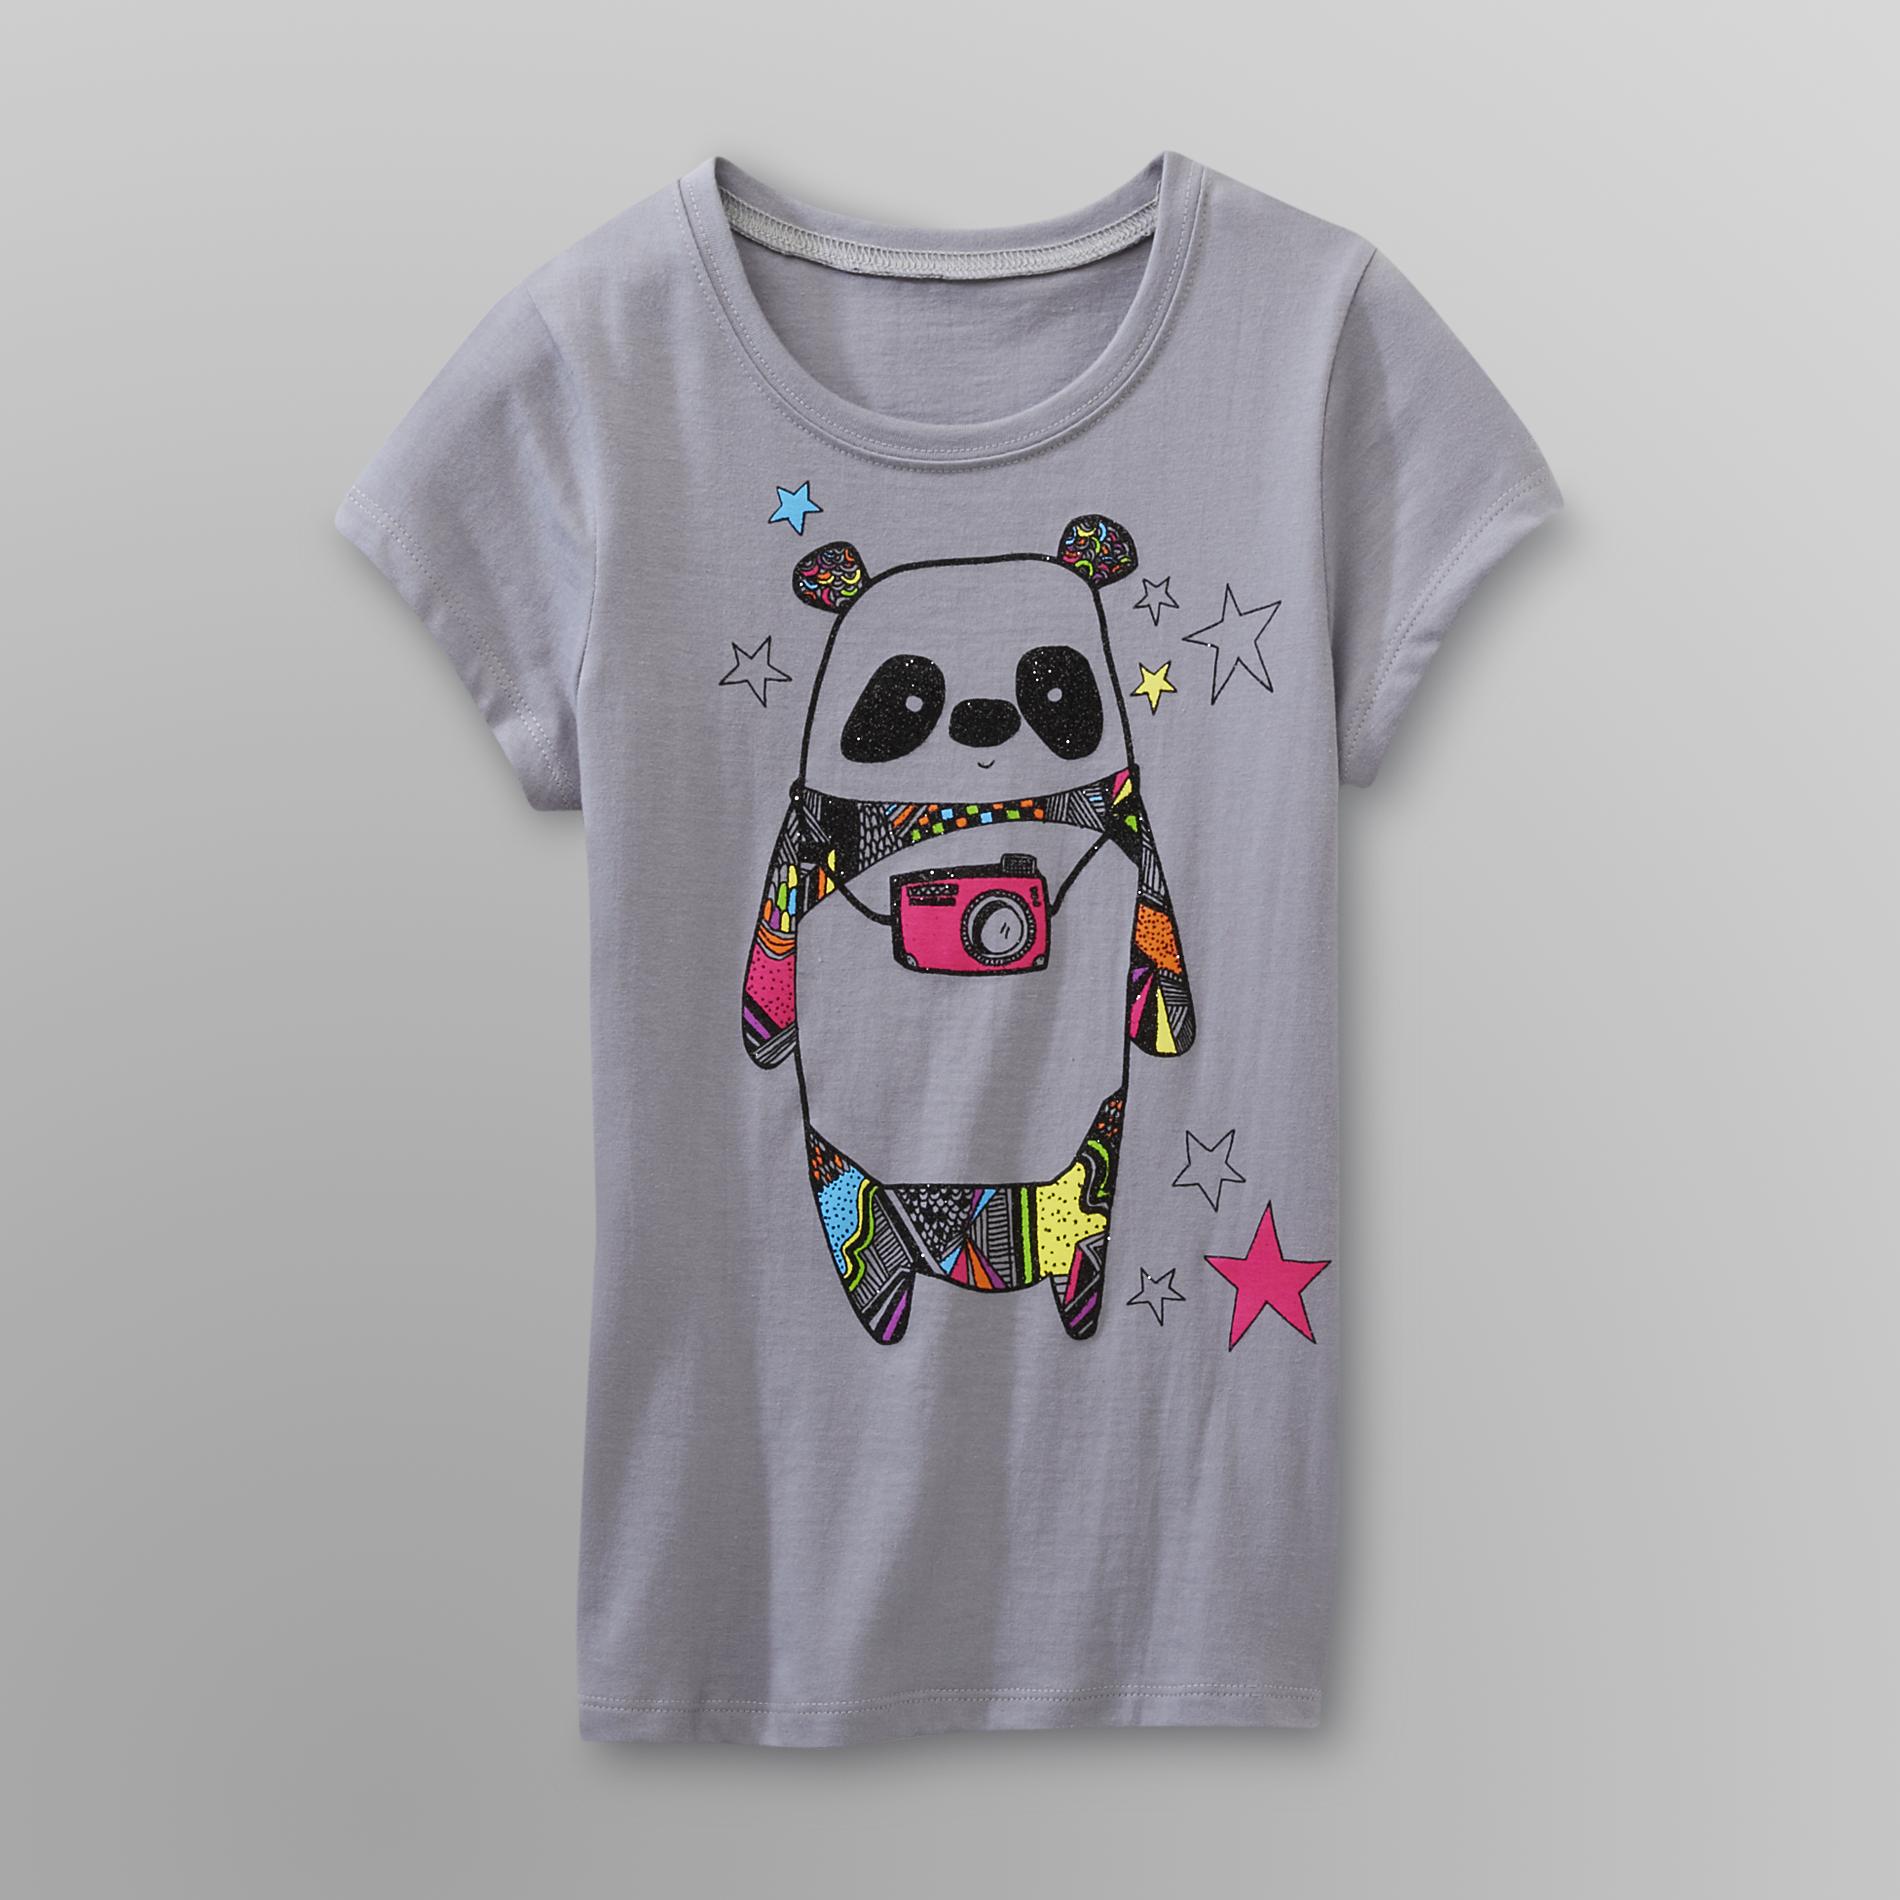 Route 66 Girl's Graphic T-Shirt - Panda